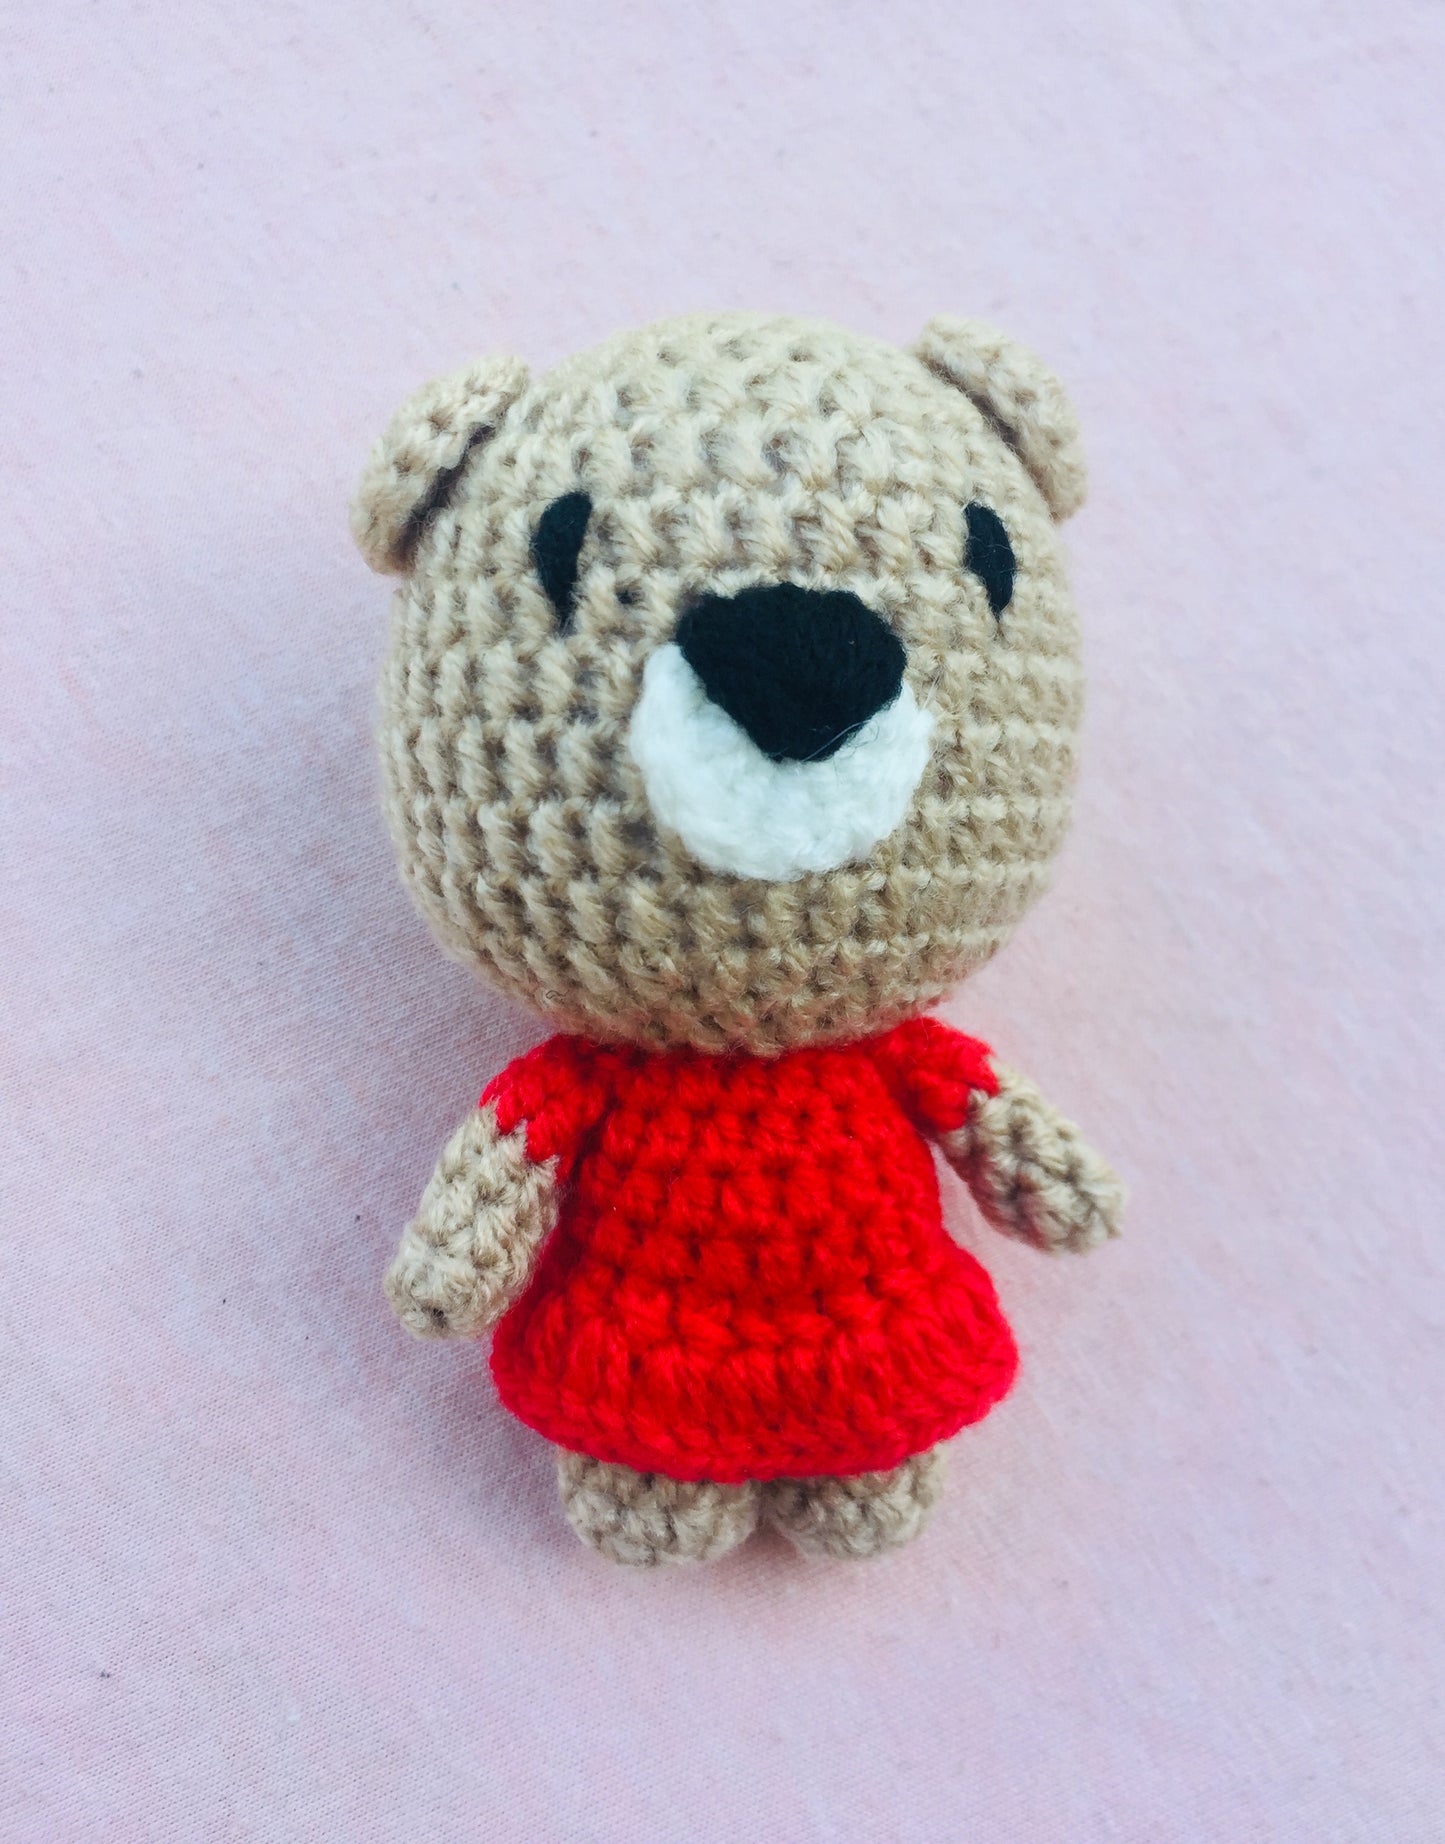 Handmade Cute crochet Small Teddy- Amigurumi stuffed animal